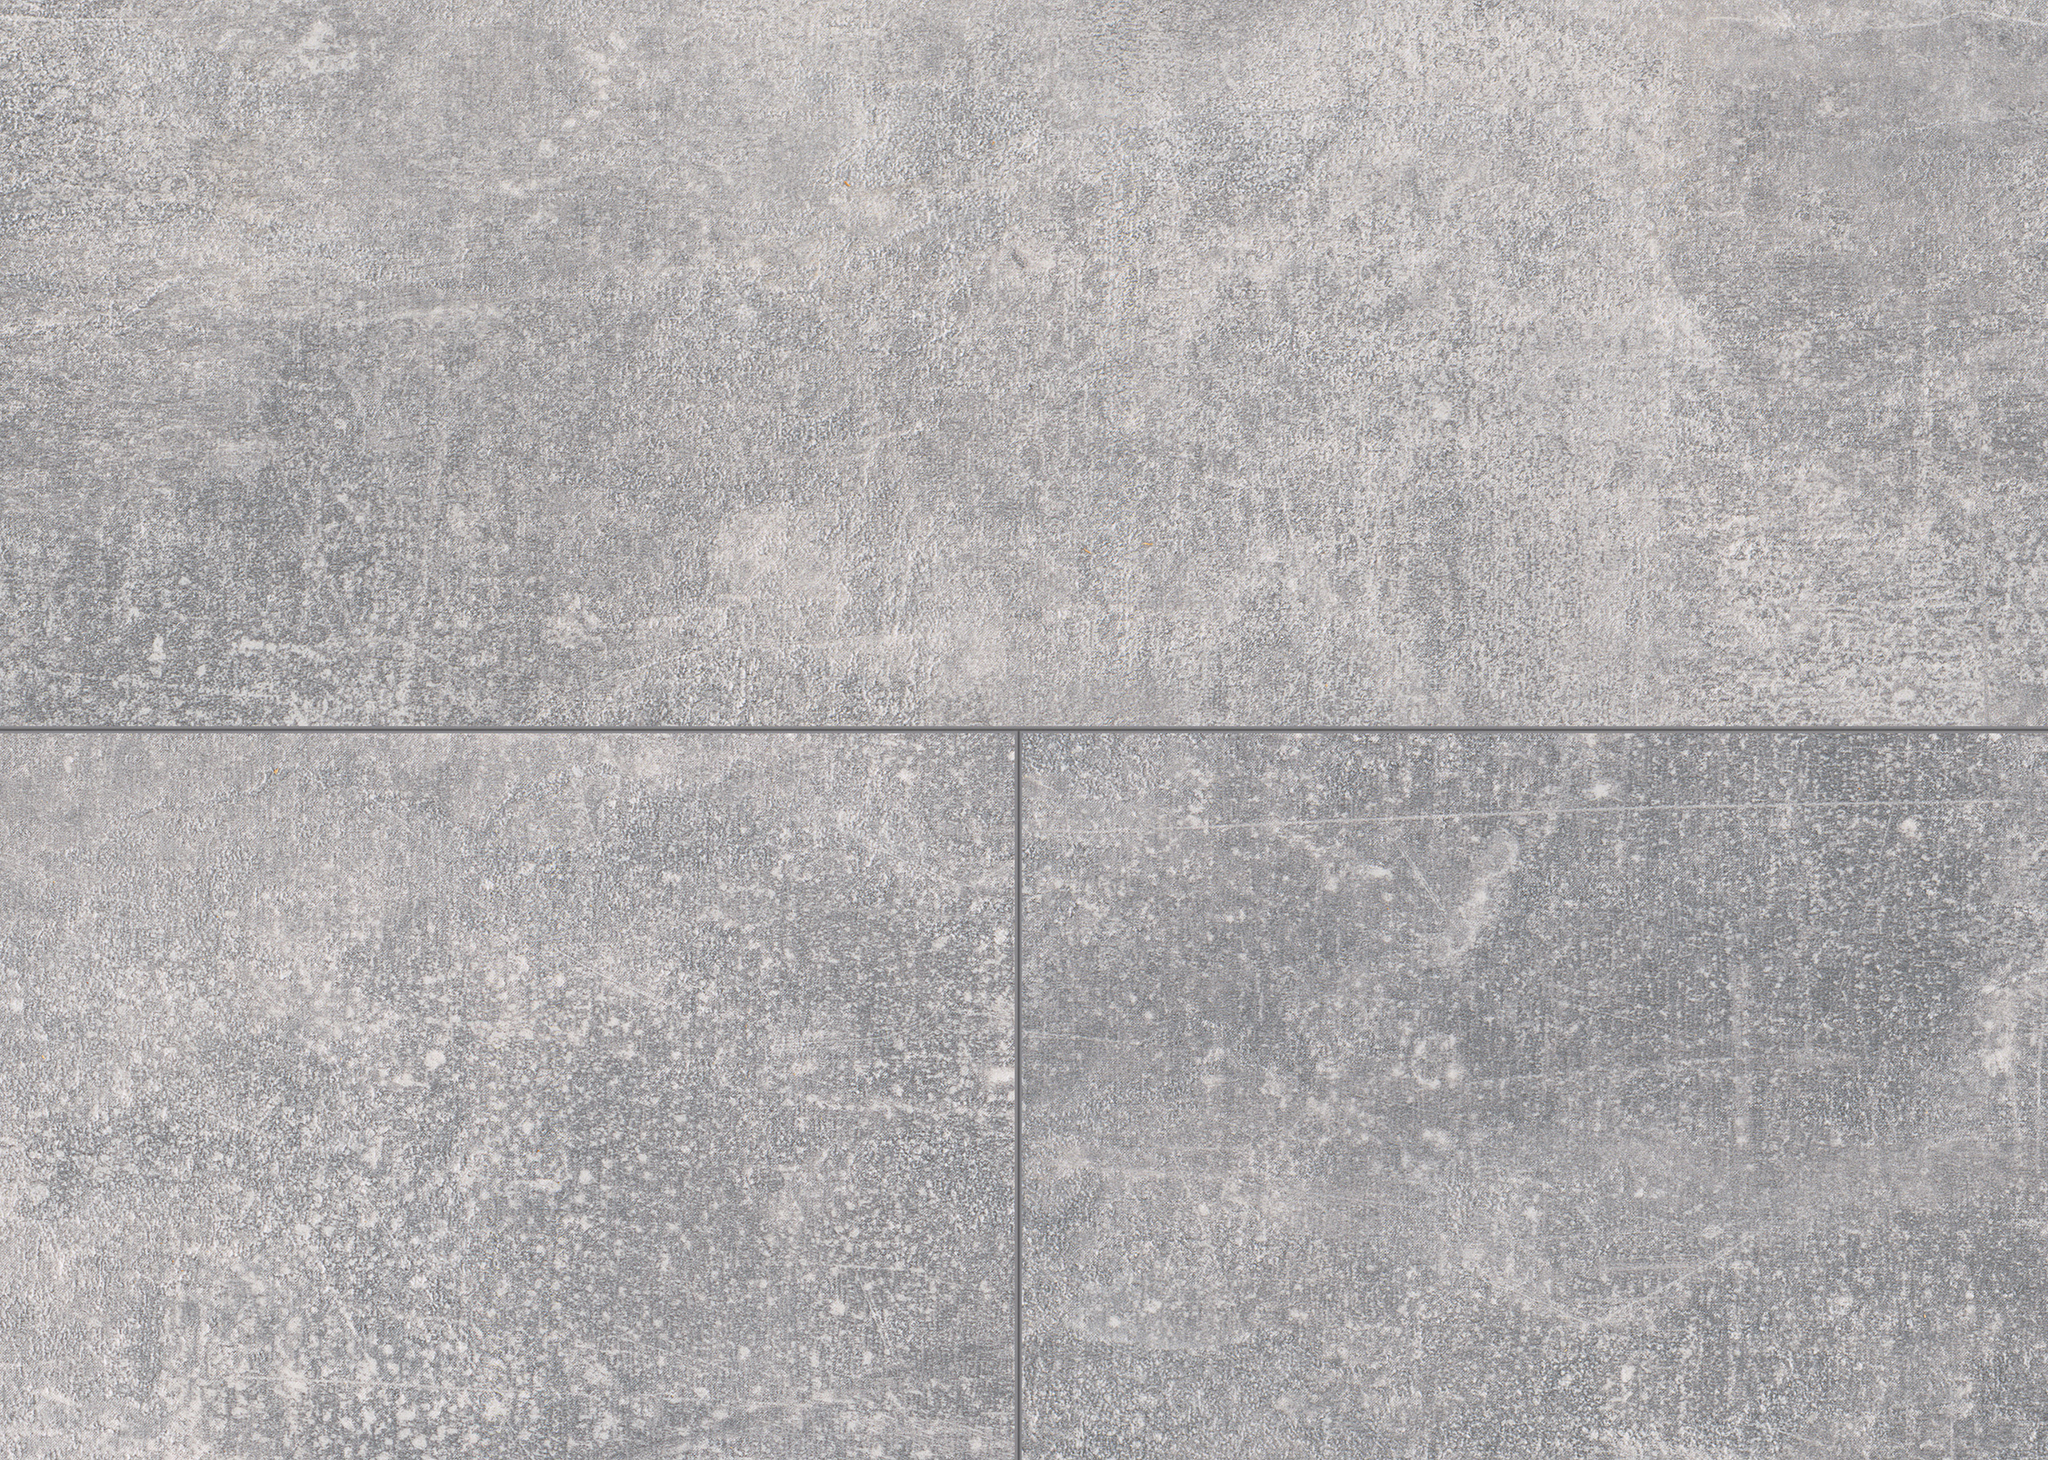 eterna Loc 8 concrete grey laminate tile